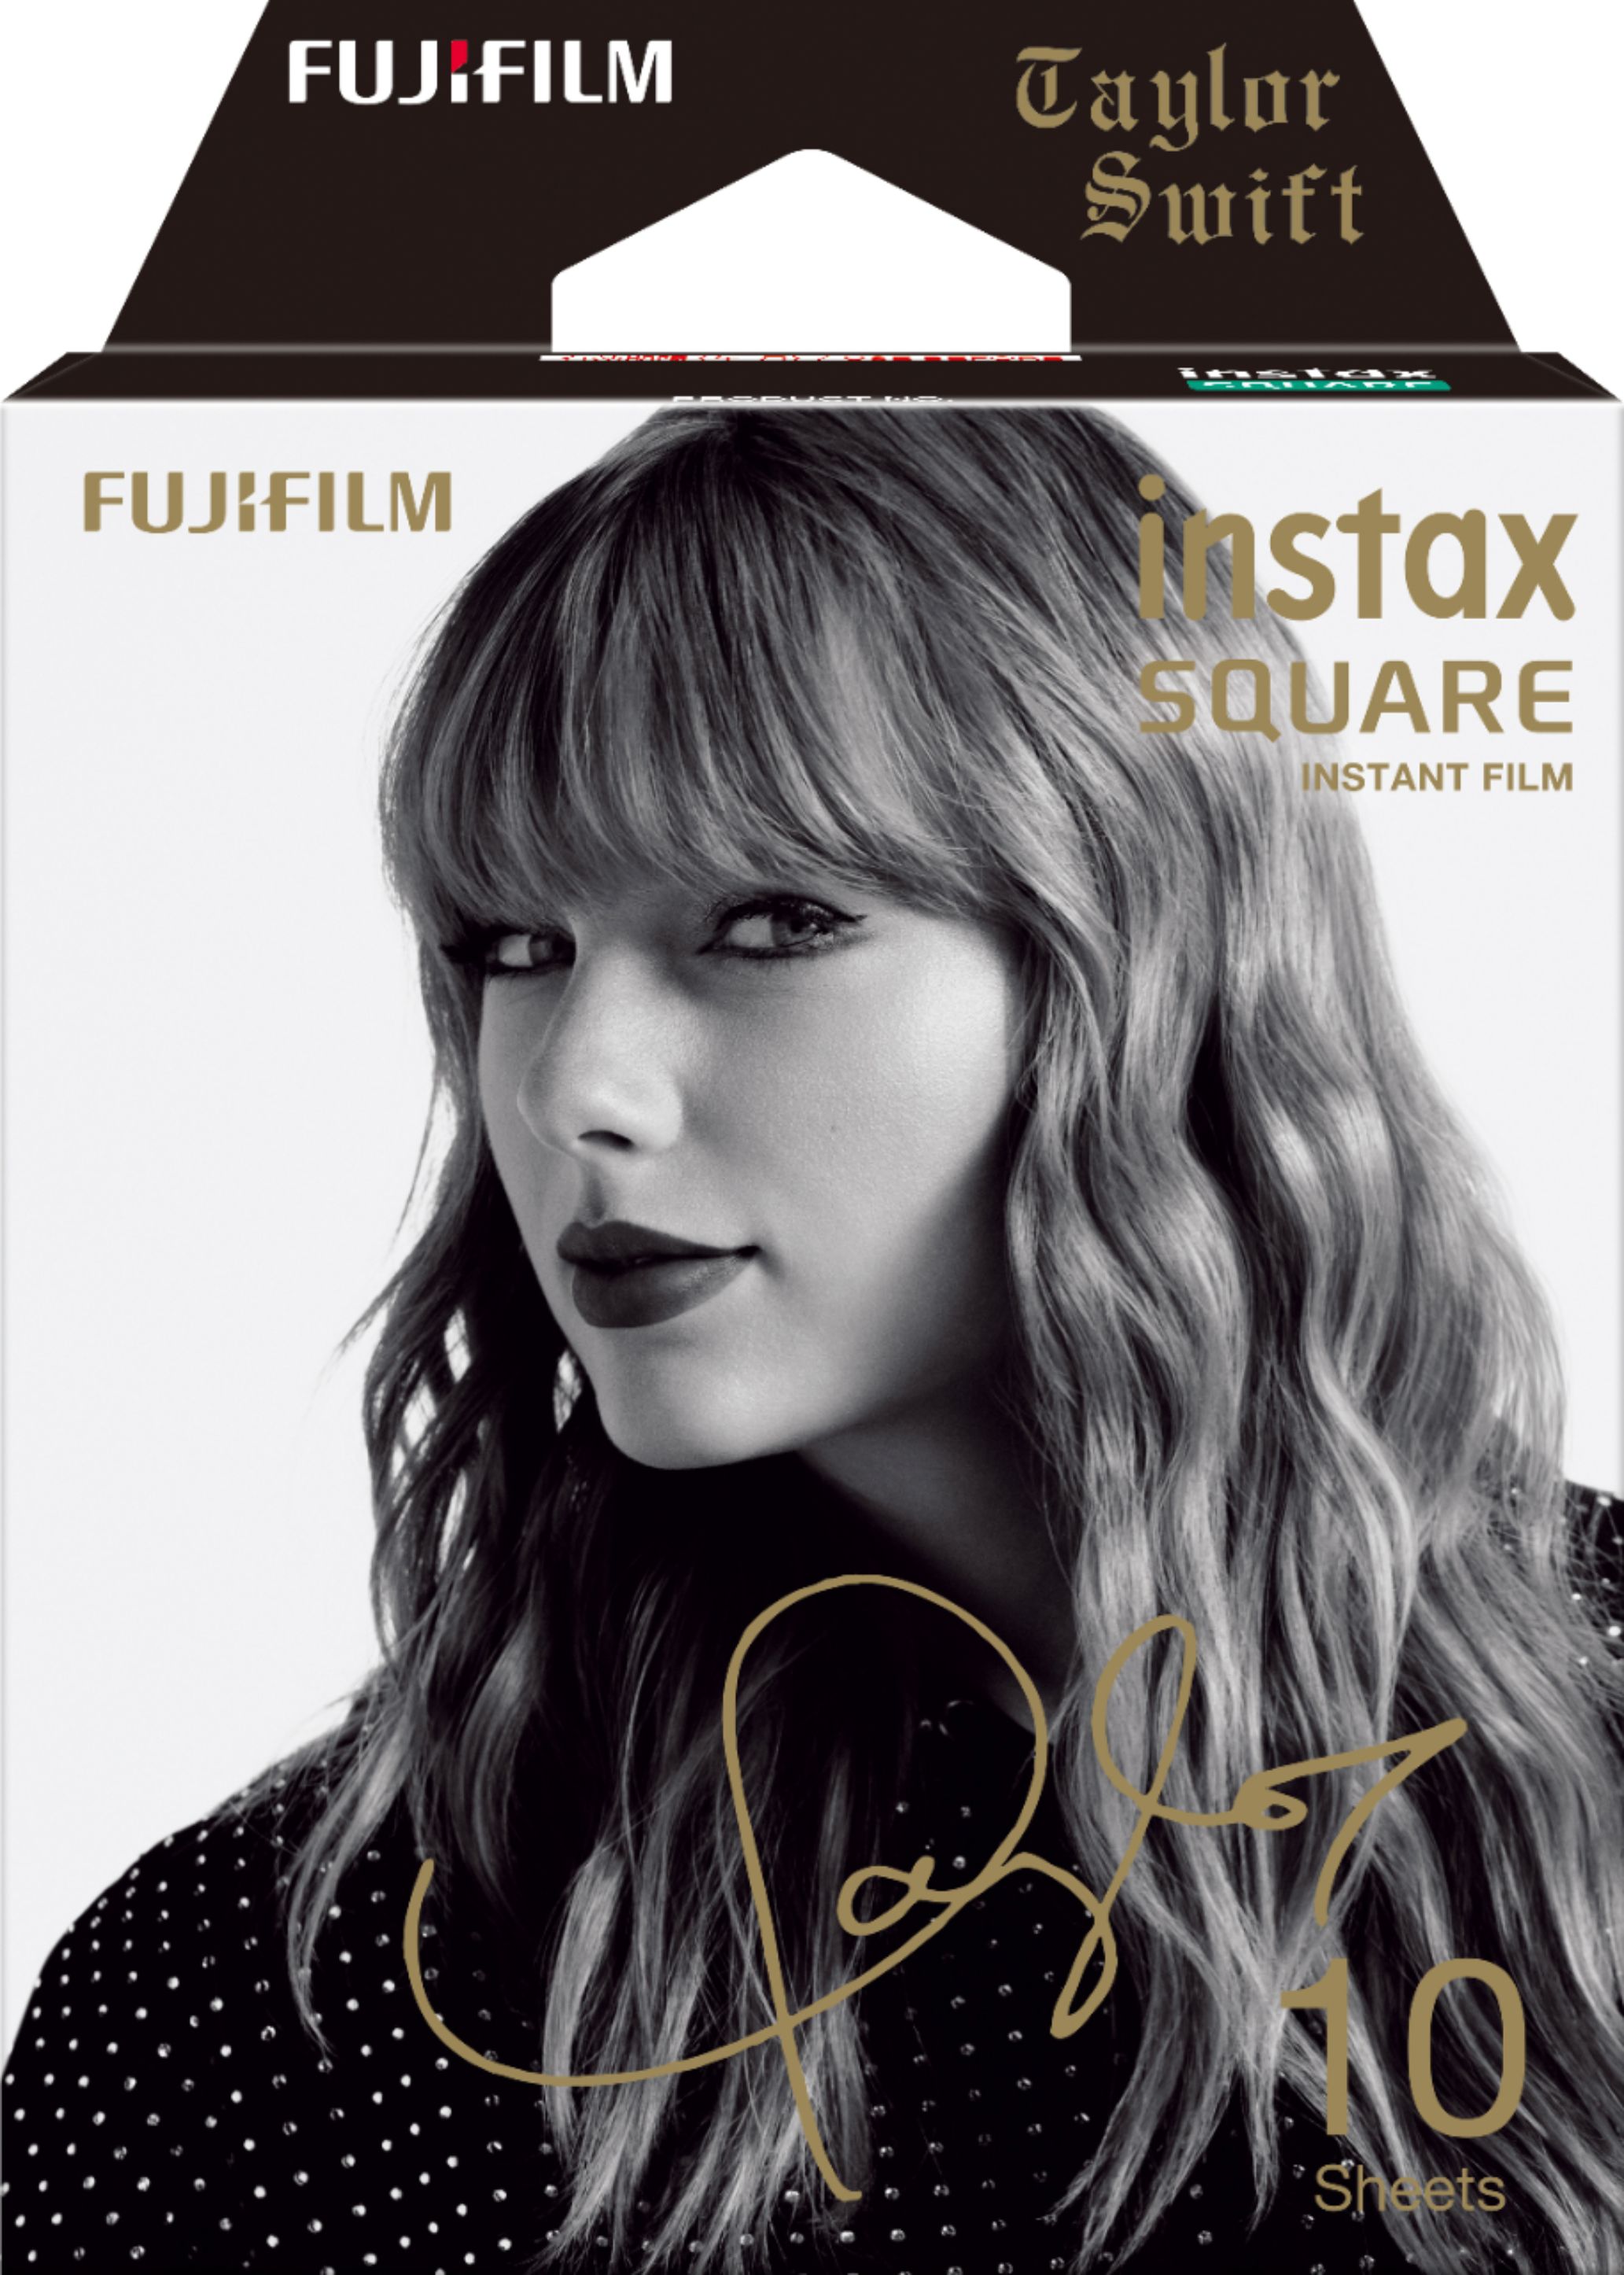 Kelder bed Slepen Best Buy: Fujifilm instax SQUARE Film Taylor Swift Edition (10 Sheets)  16601820